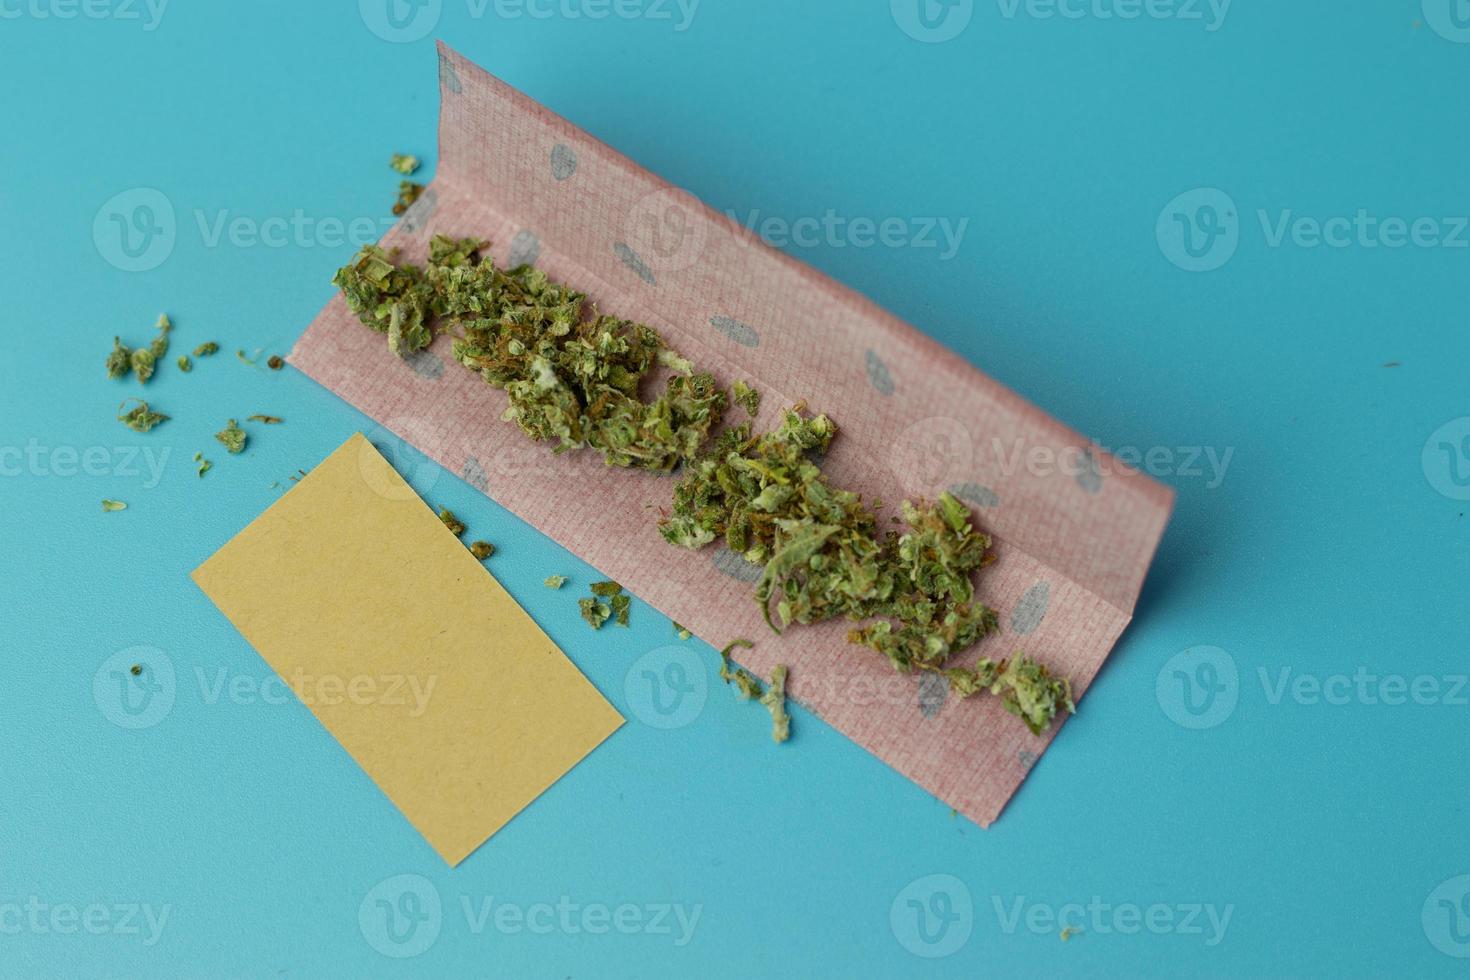 papel común para rollo de cannabis en la vista superior de fondo azul, accesorio para fumar marihuana foto